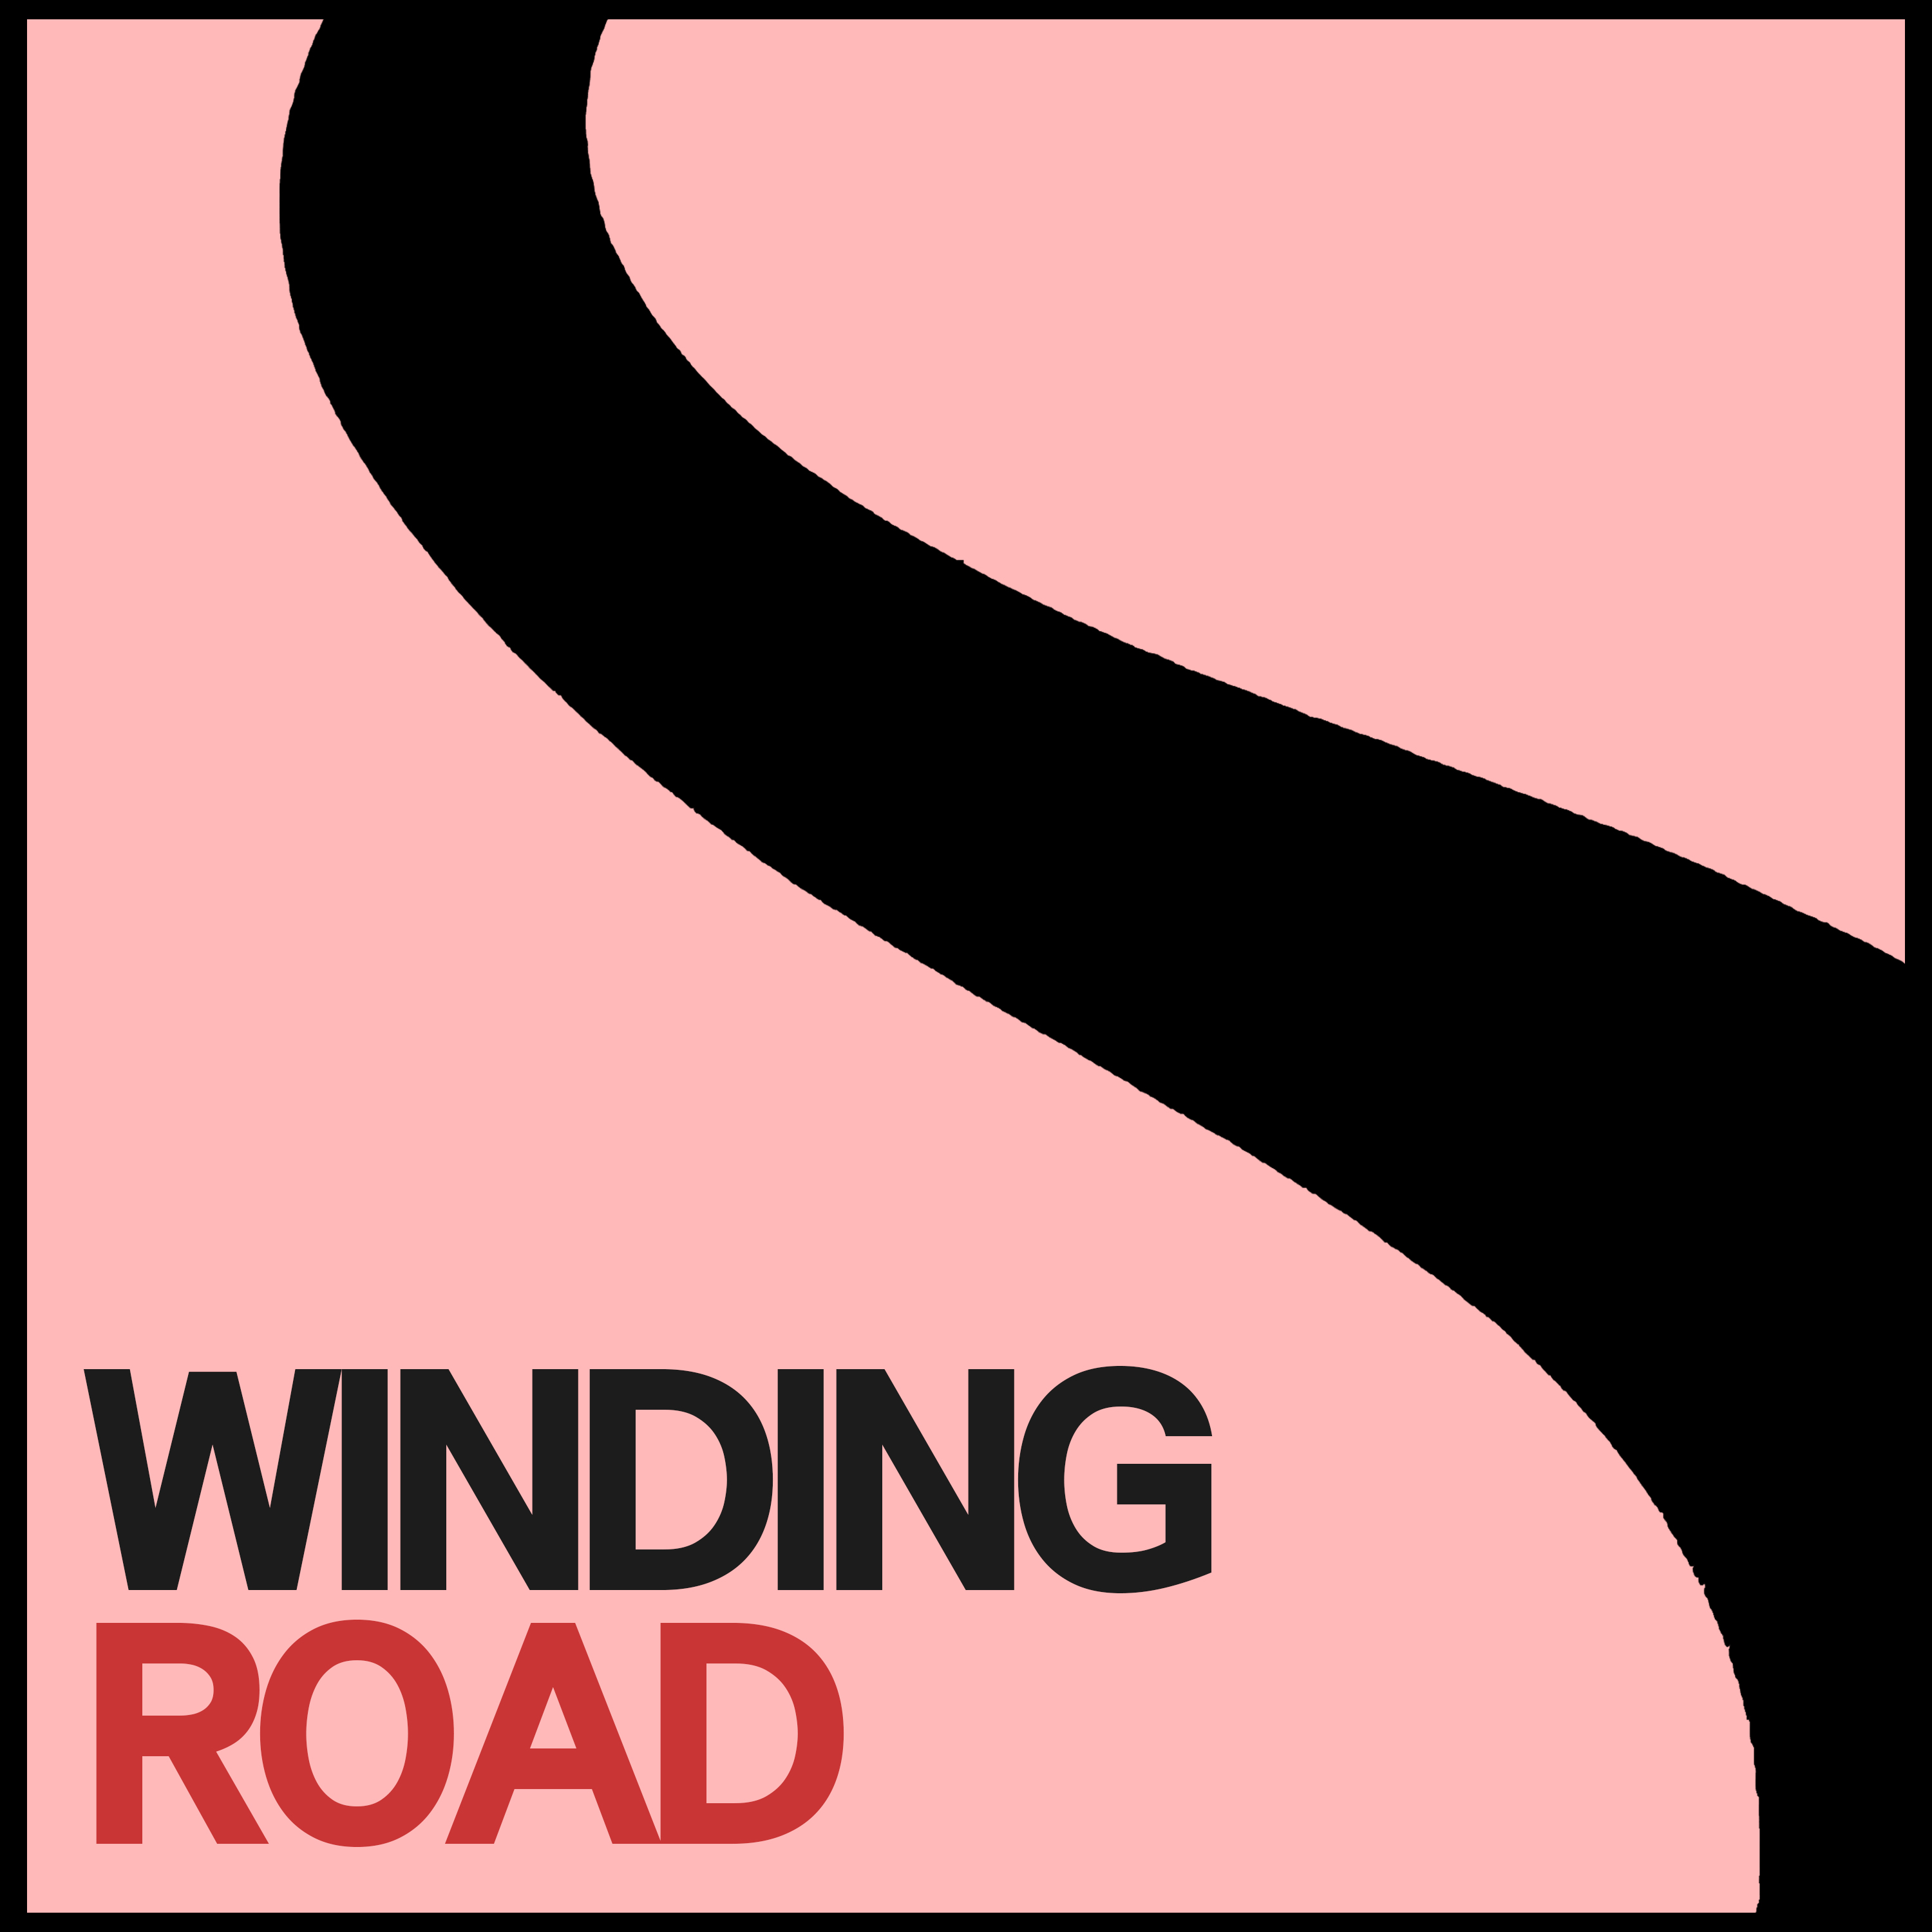 WINDING ROAD